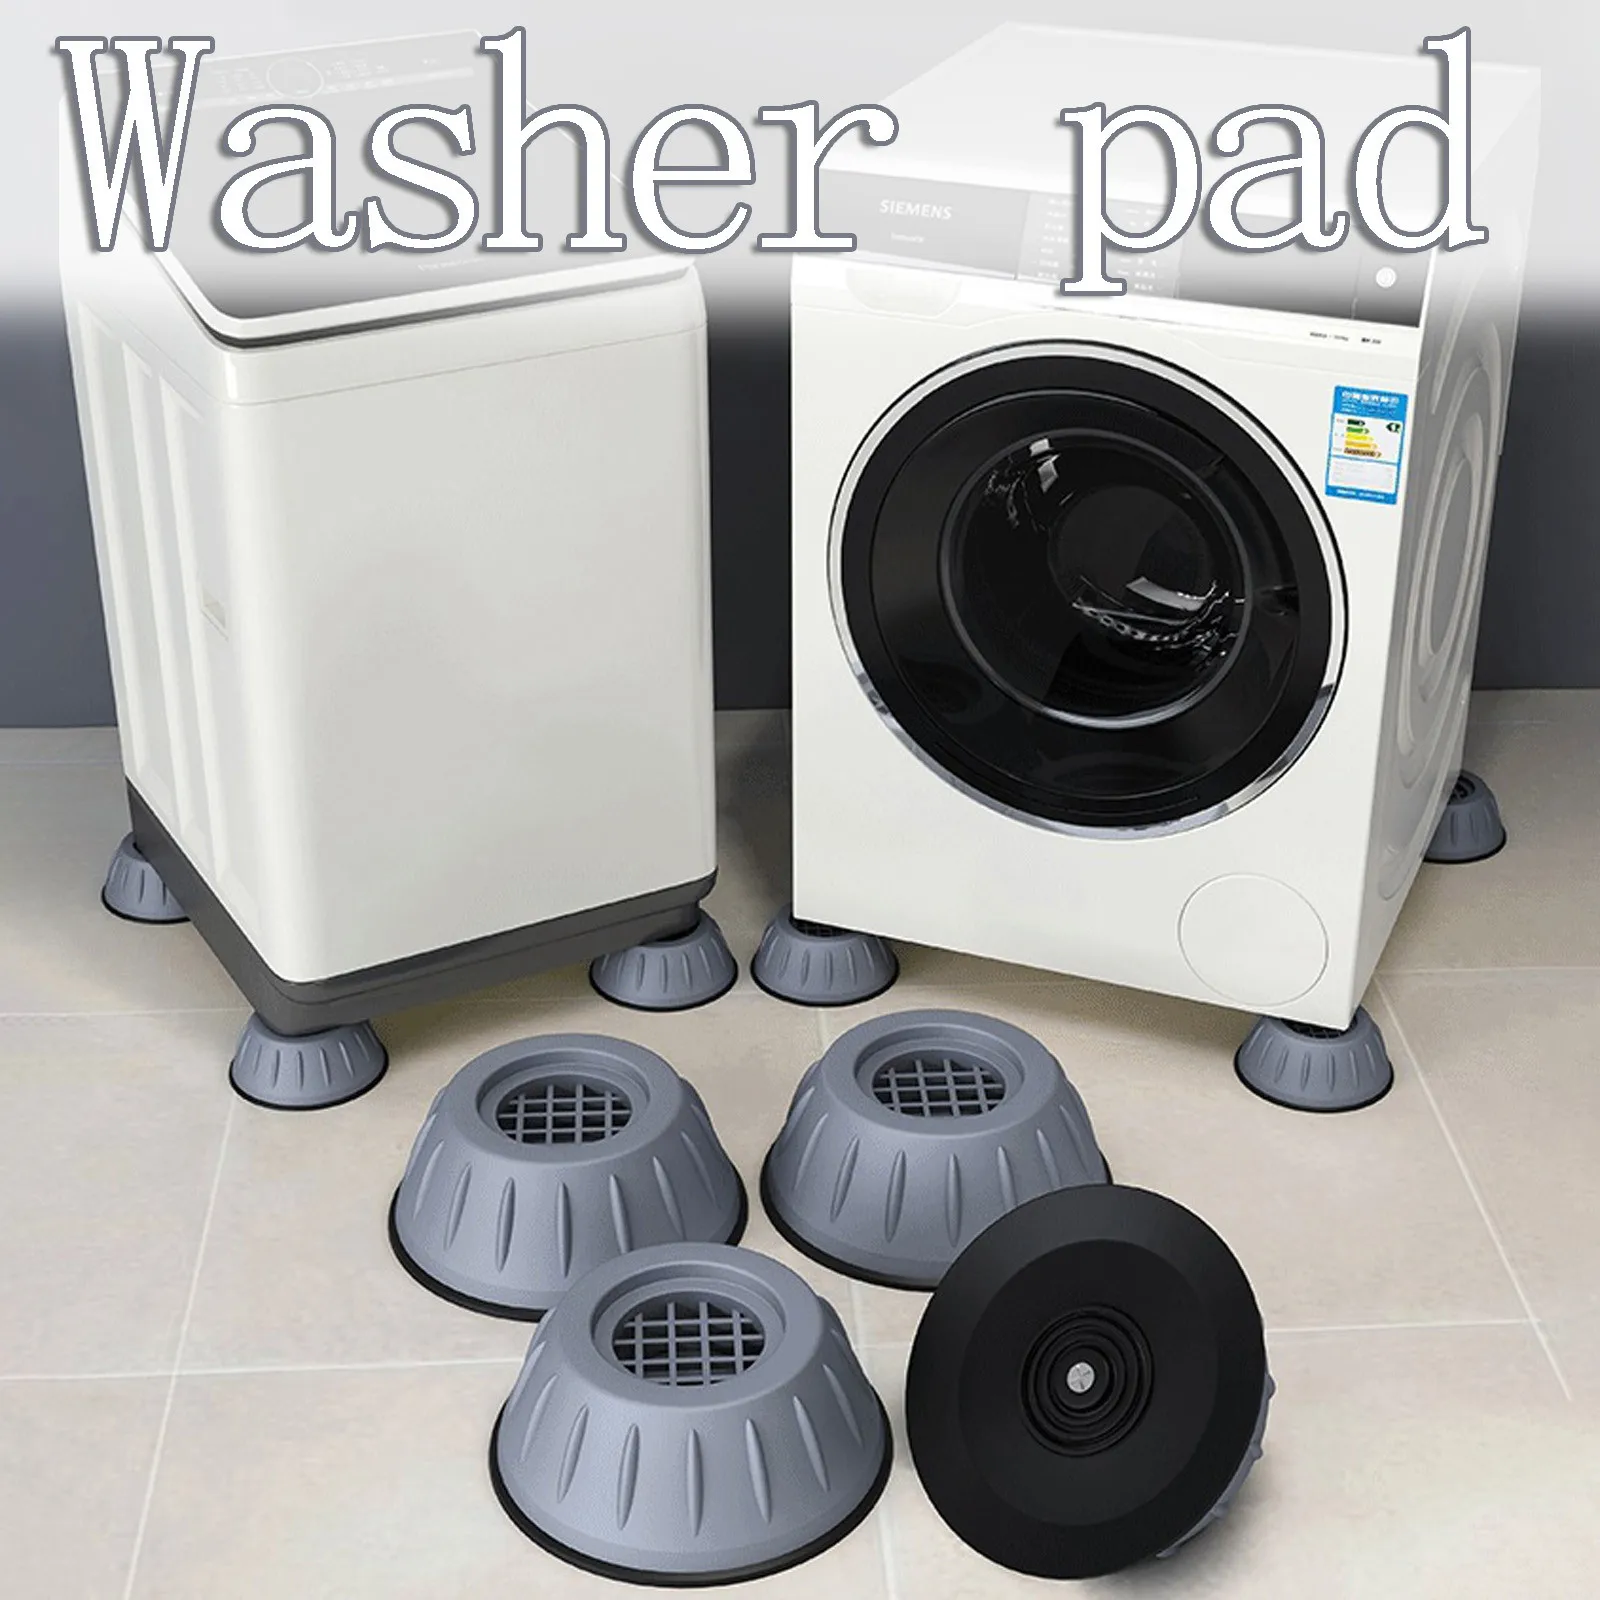 4 x Anti Vibration Rubber Feet for ACEC Washing Machine Dryer Dishwasher Fridge 